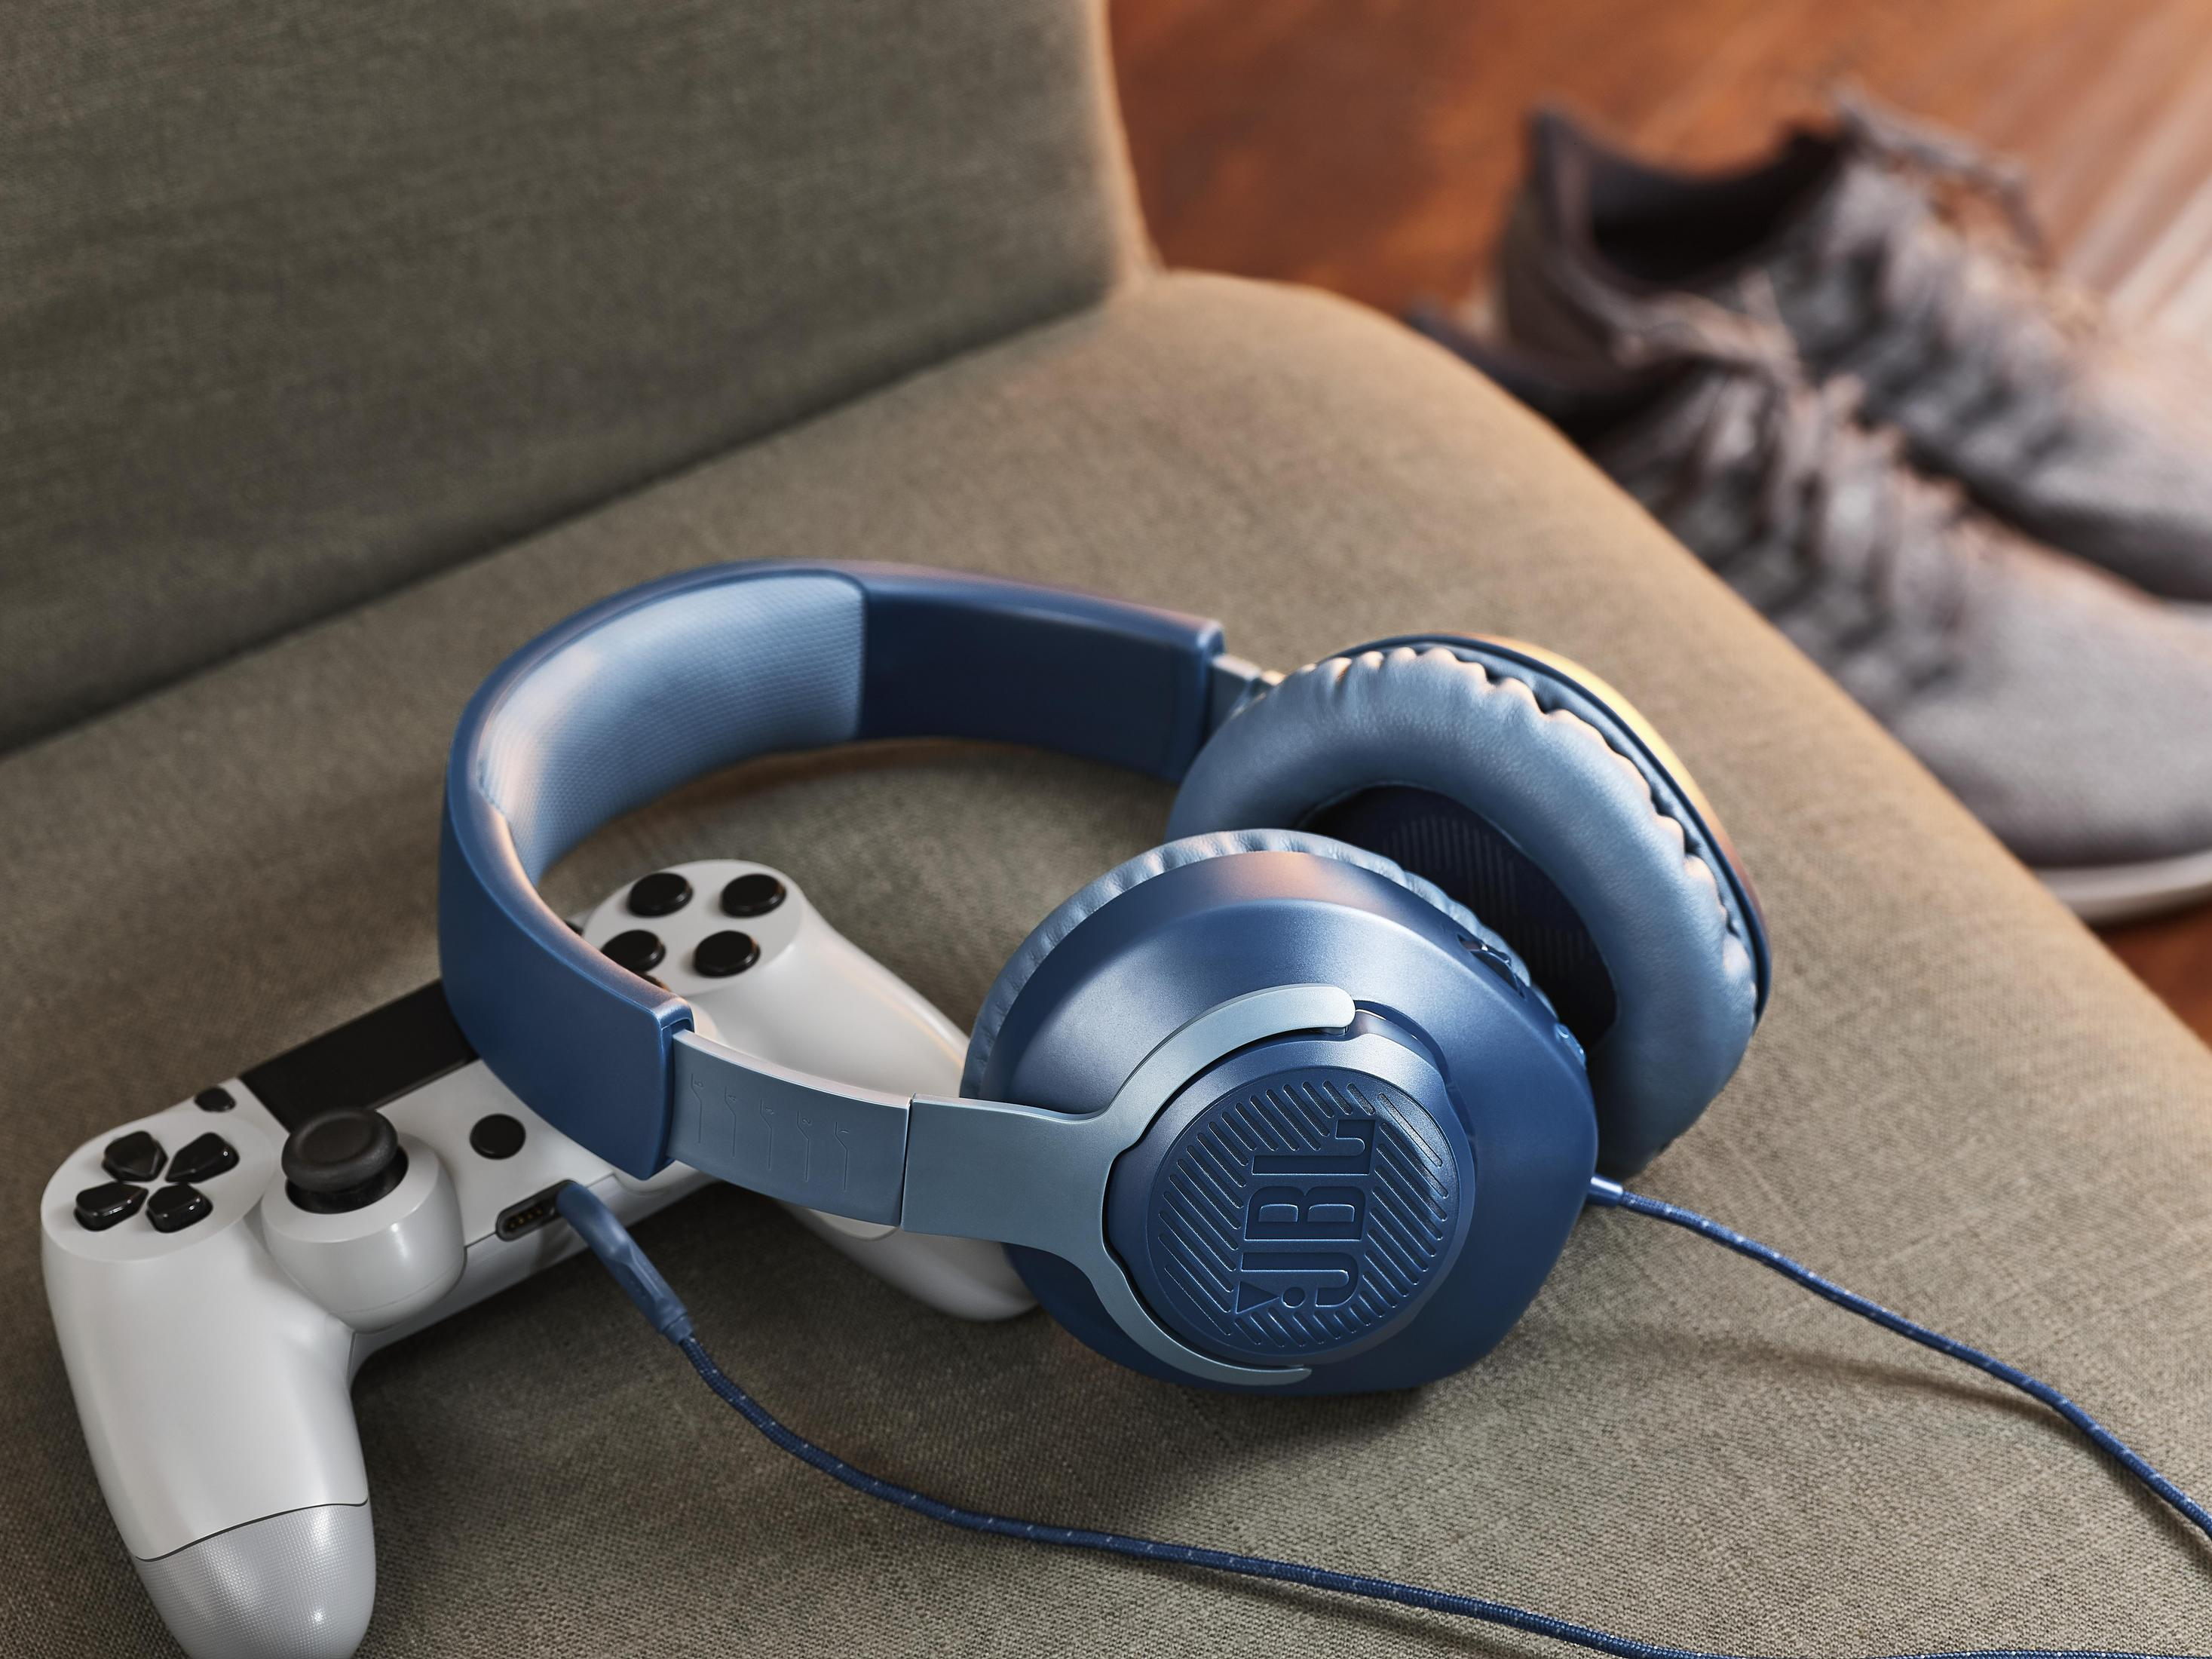 JBL QUANTUM BLUE, Blau 100 On-ear Gaming Headset